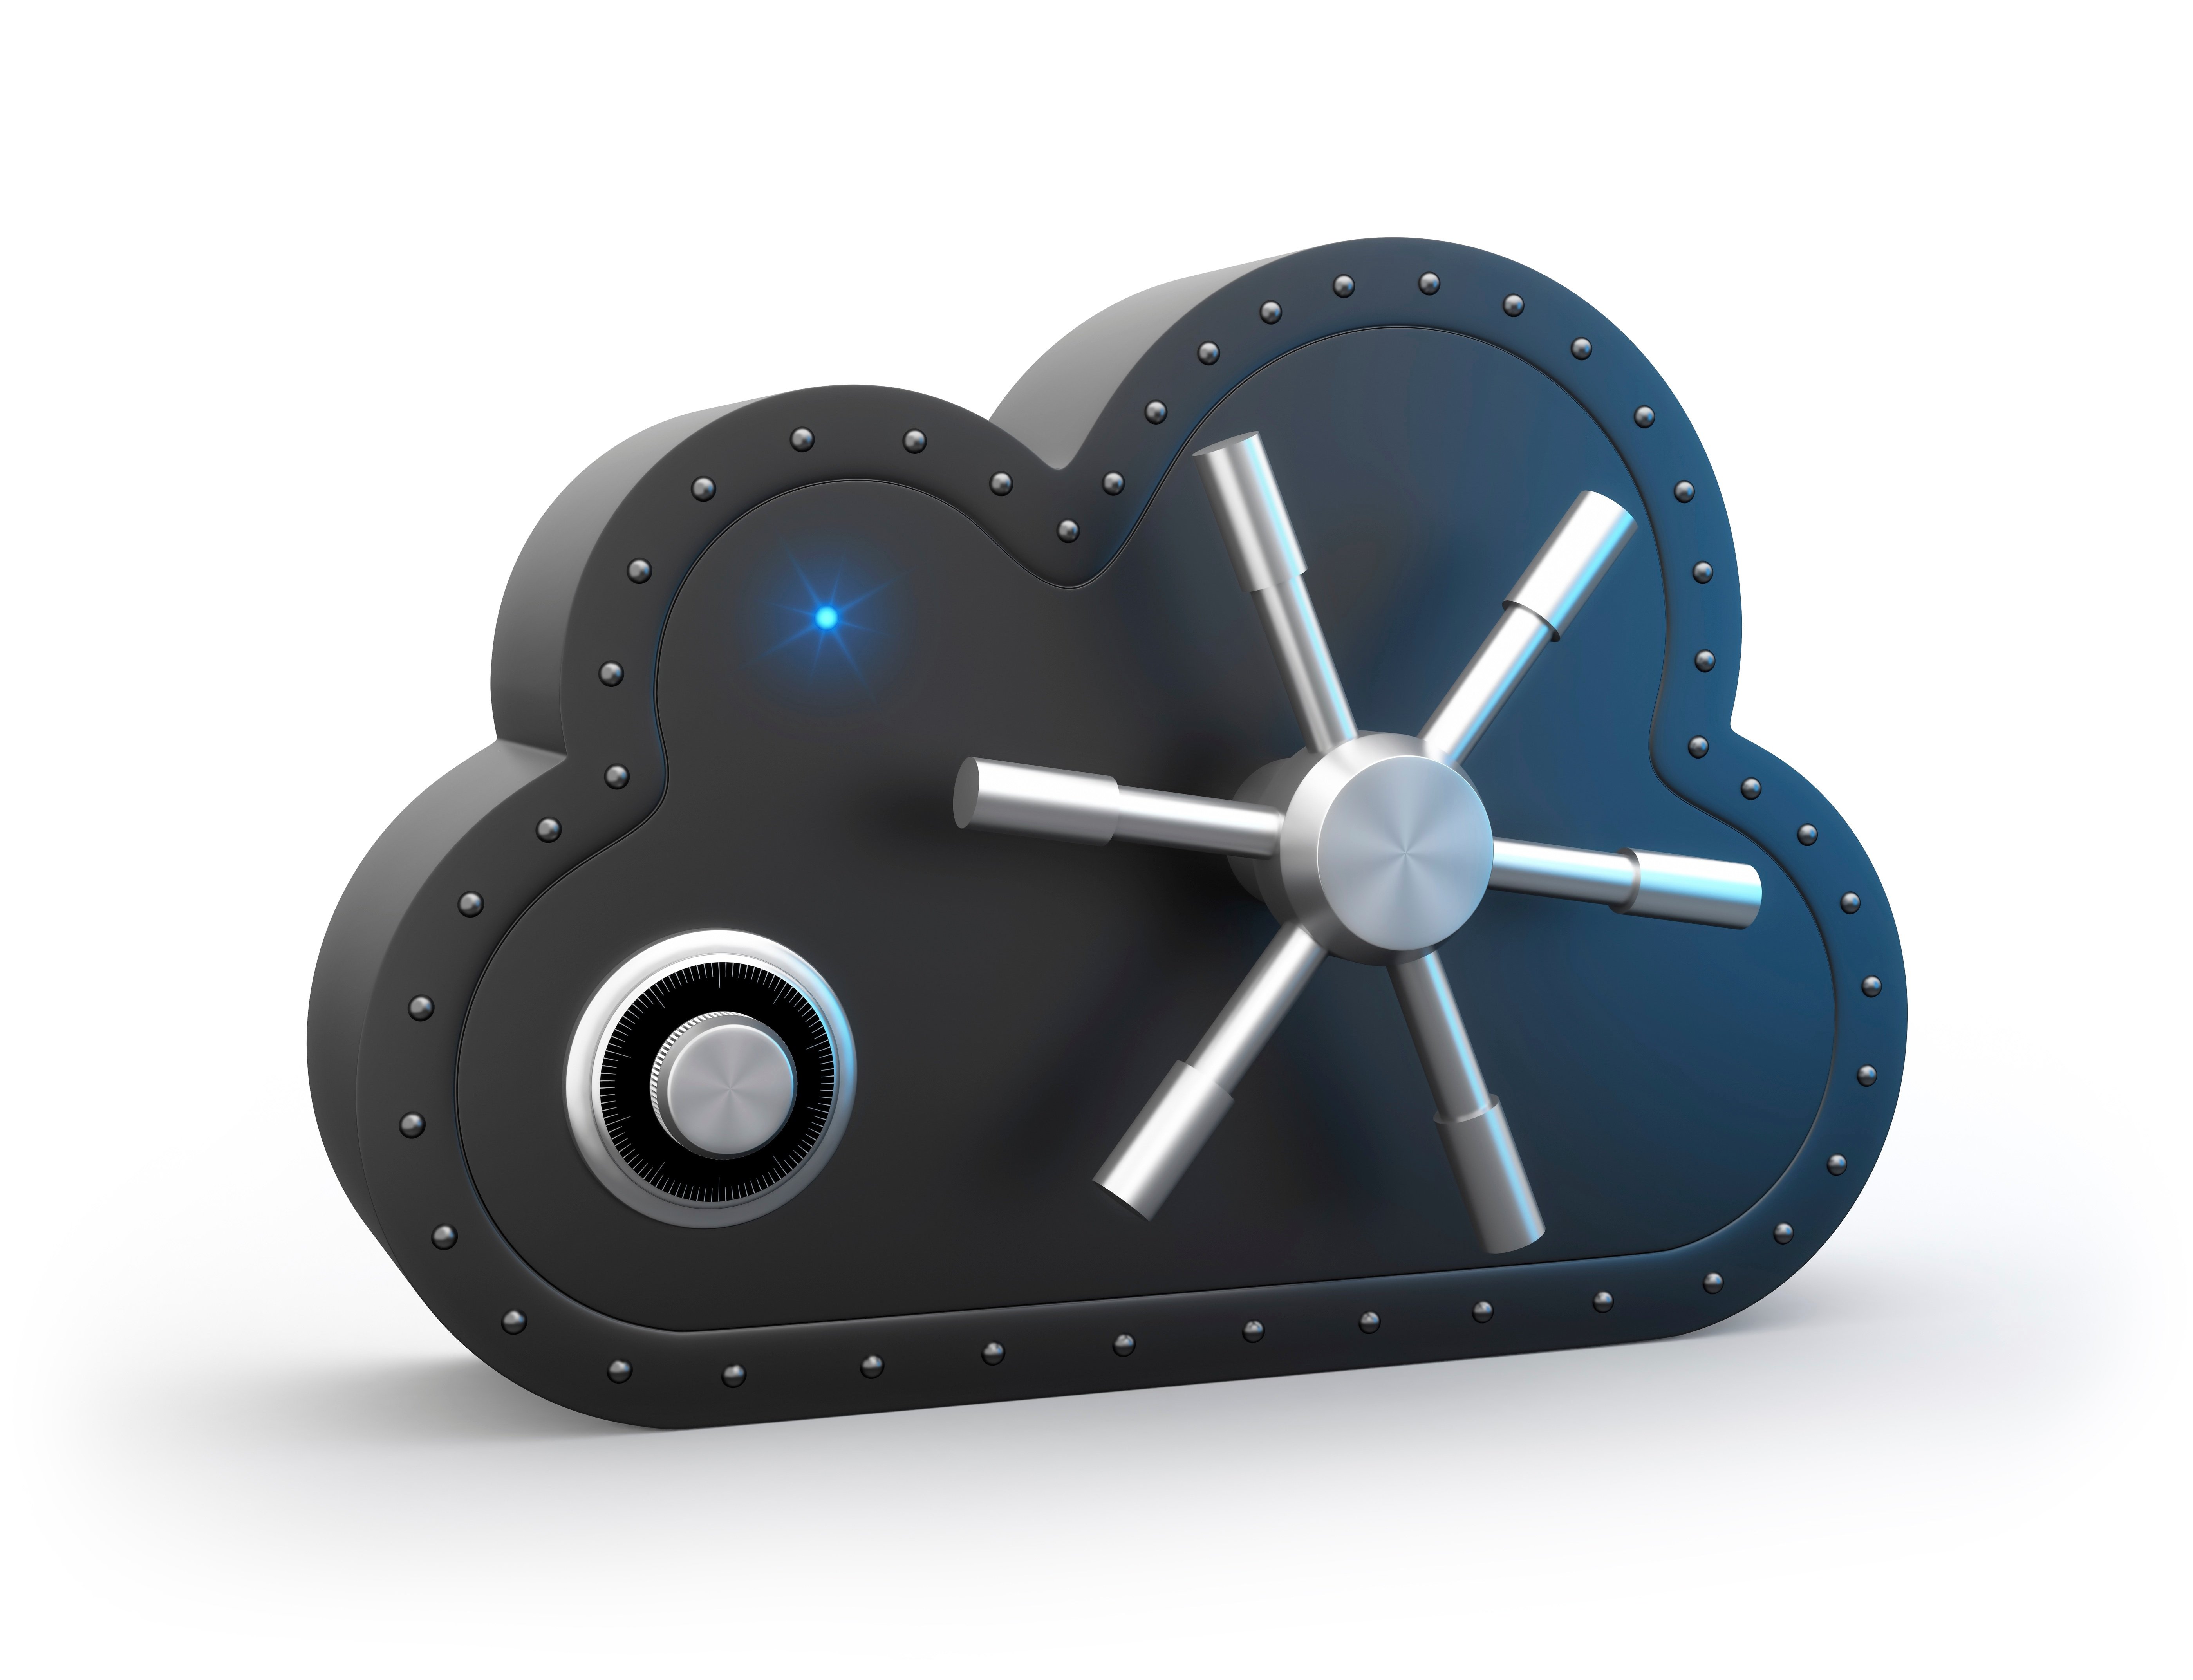 Security in NetSuite Cloud